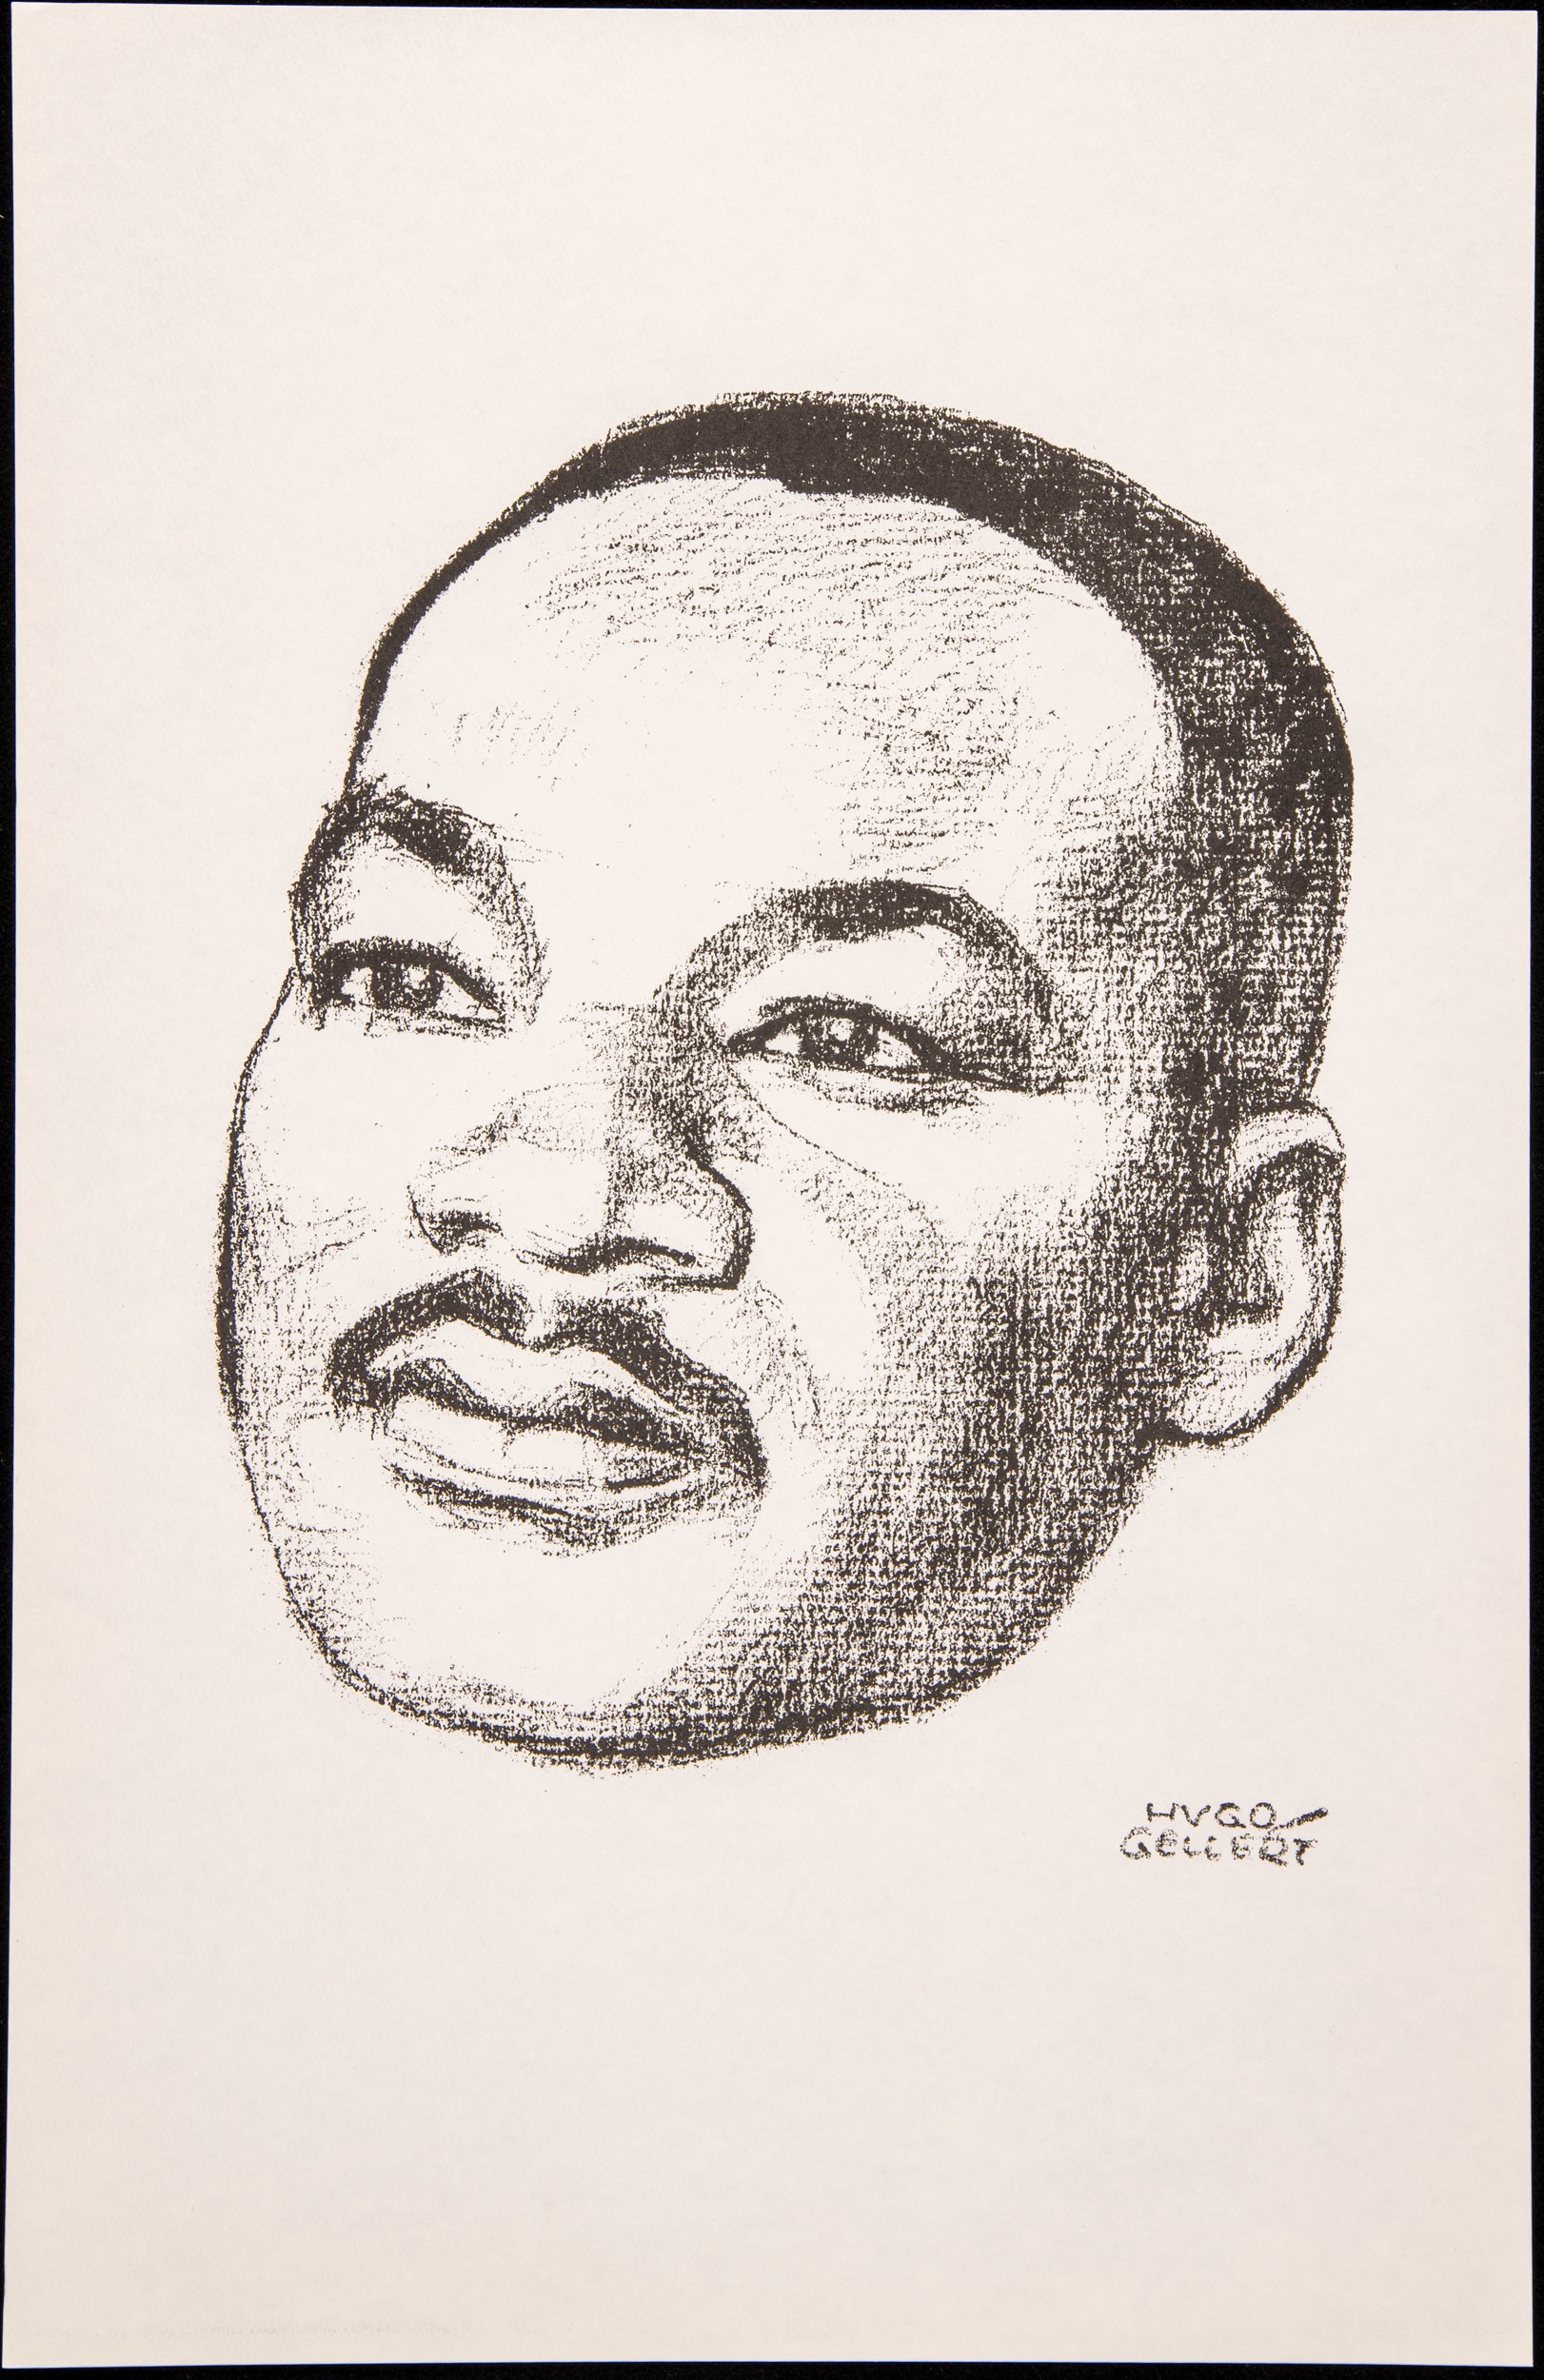 Gellért Hugó: Dr. Martin Luther King, Jr. (Müller Miklós és Jan S. Keithly gyűjteménye - New York, USA CC BY-NC-SA)